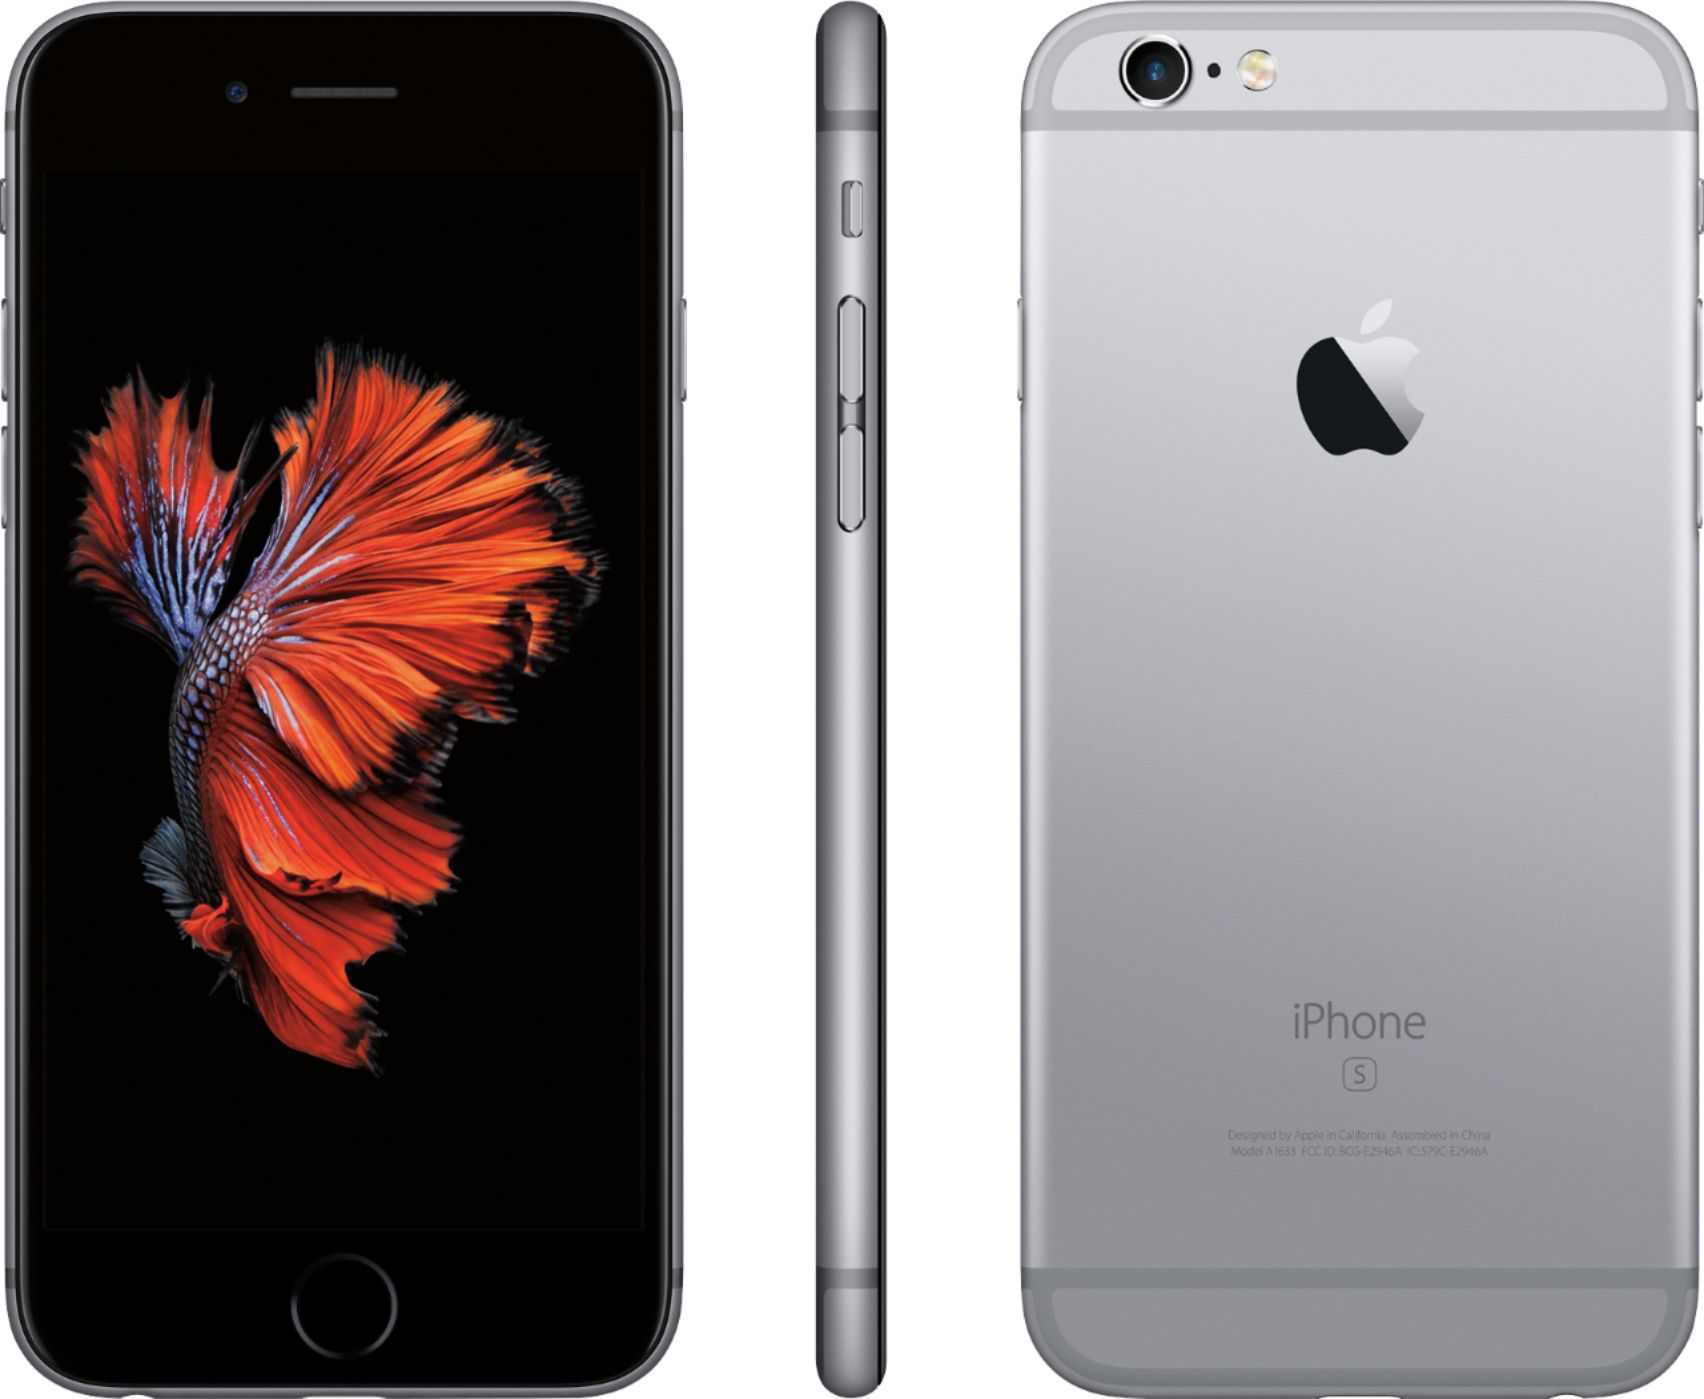 Gedragen papier aangenaam Best Buy: Apple iPhone 6s 32GB Space Gray (AT&T) MN1E2LL/A